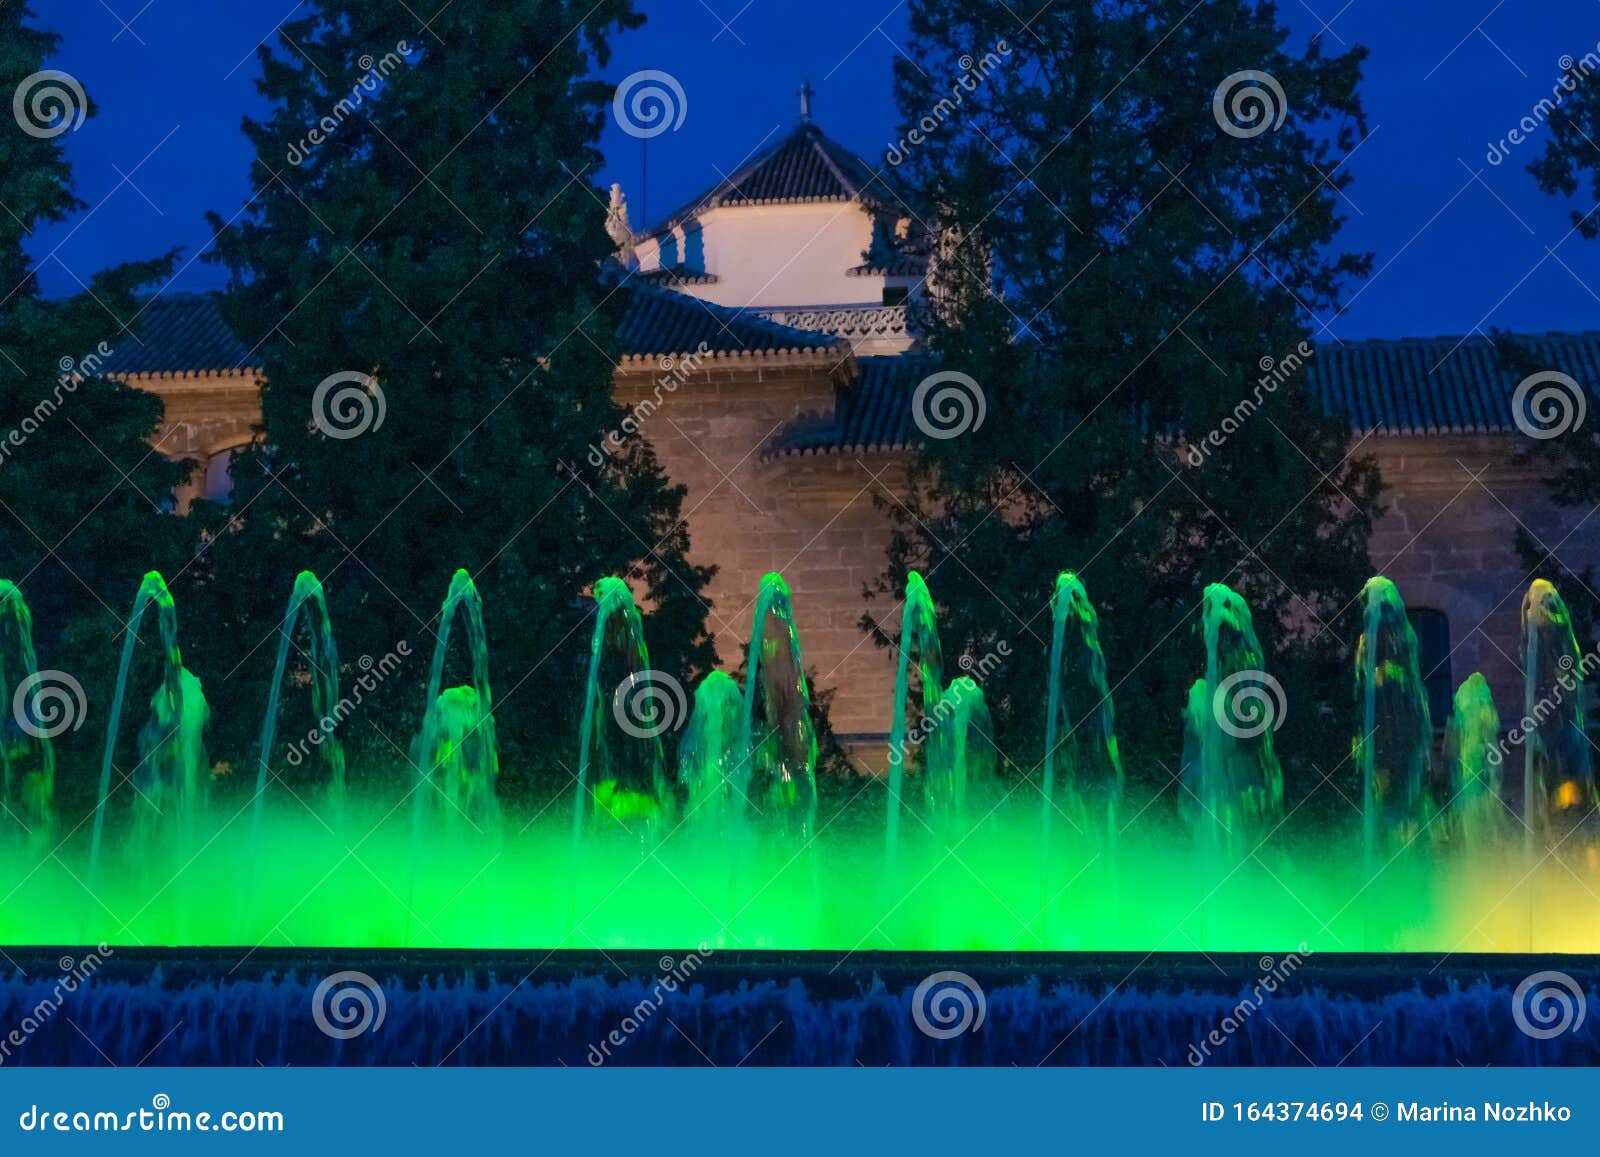 jardines de triunfo and fountain of color green at night, granada, spain